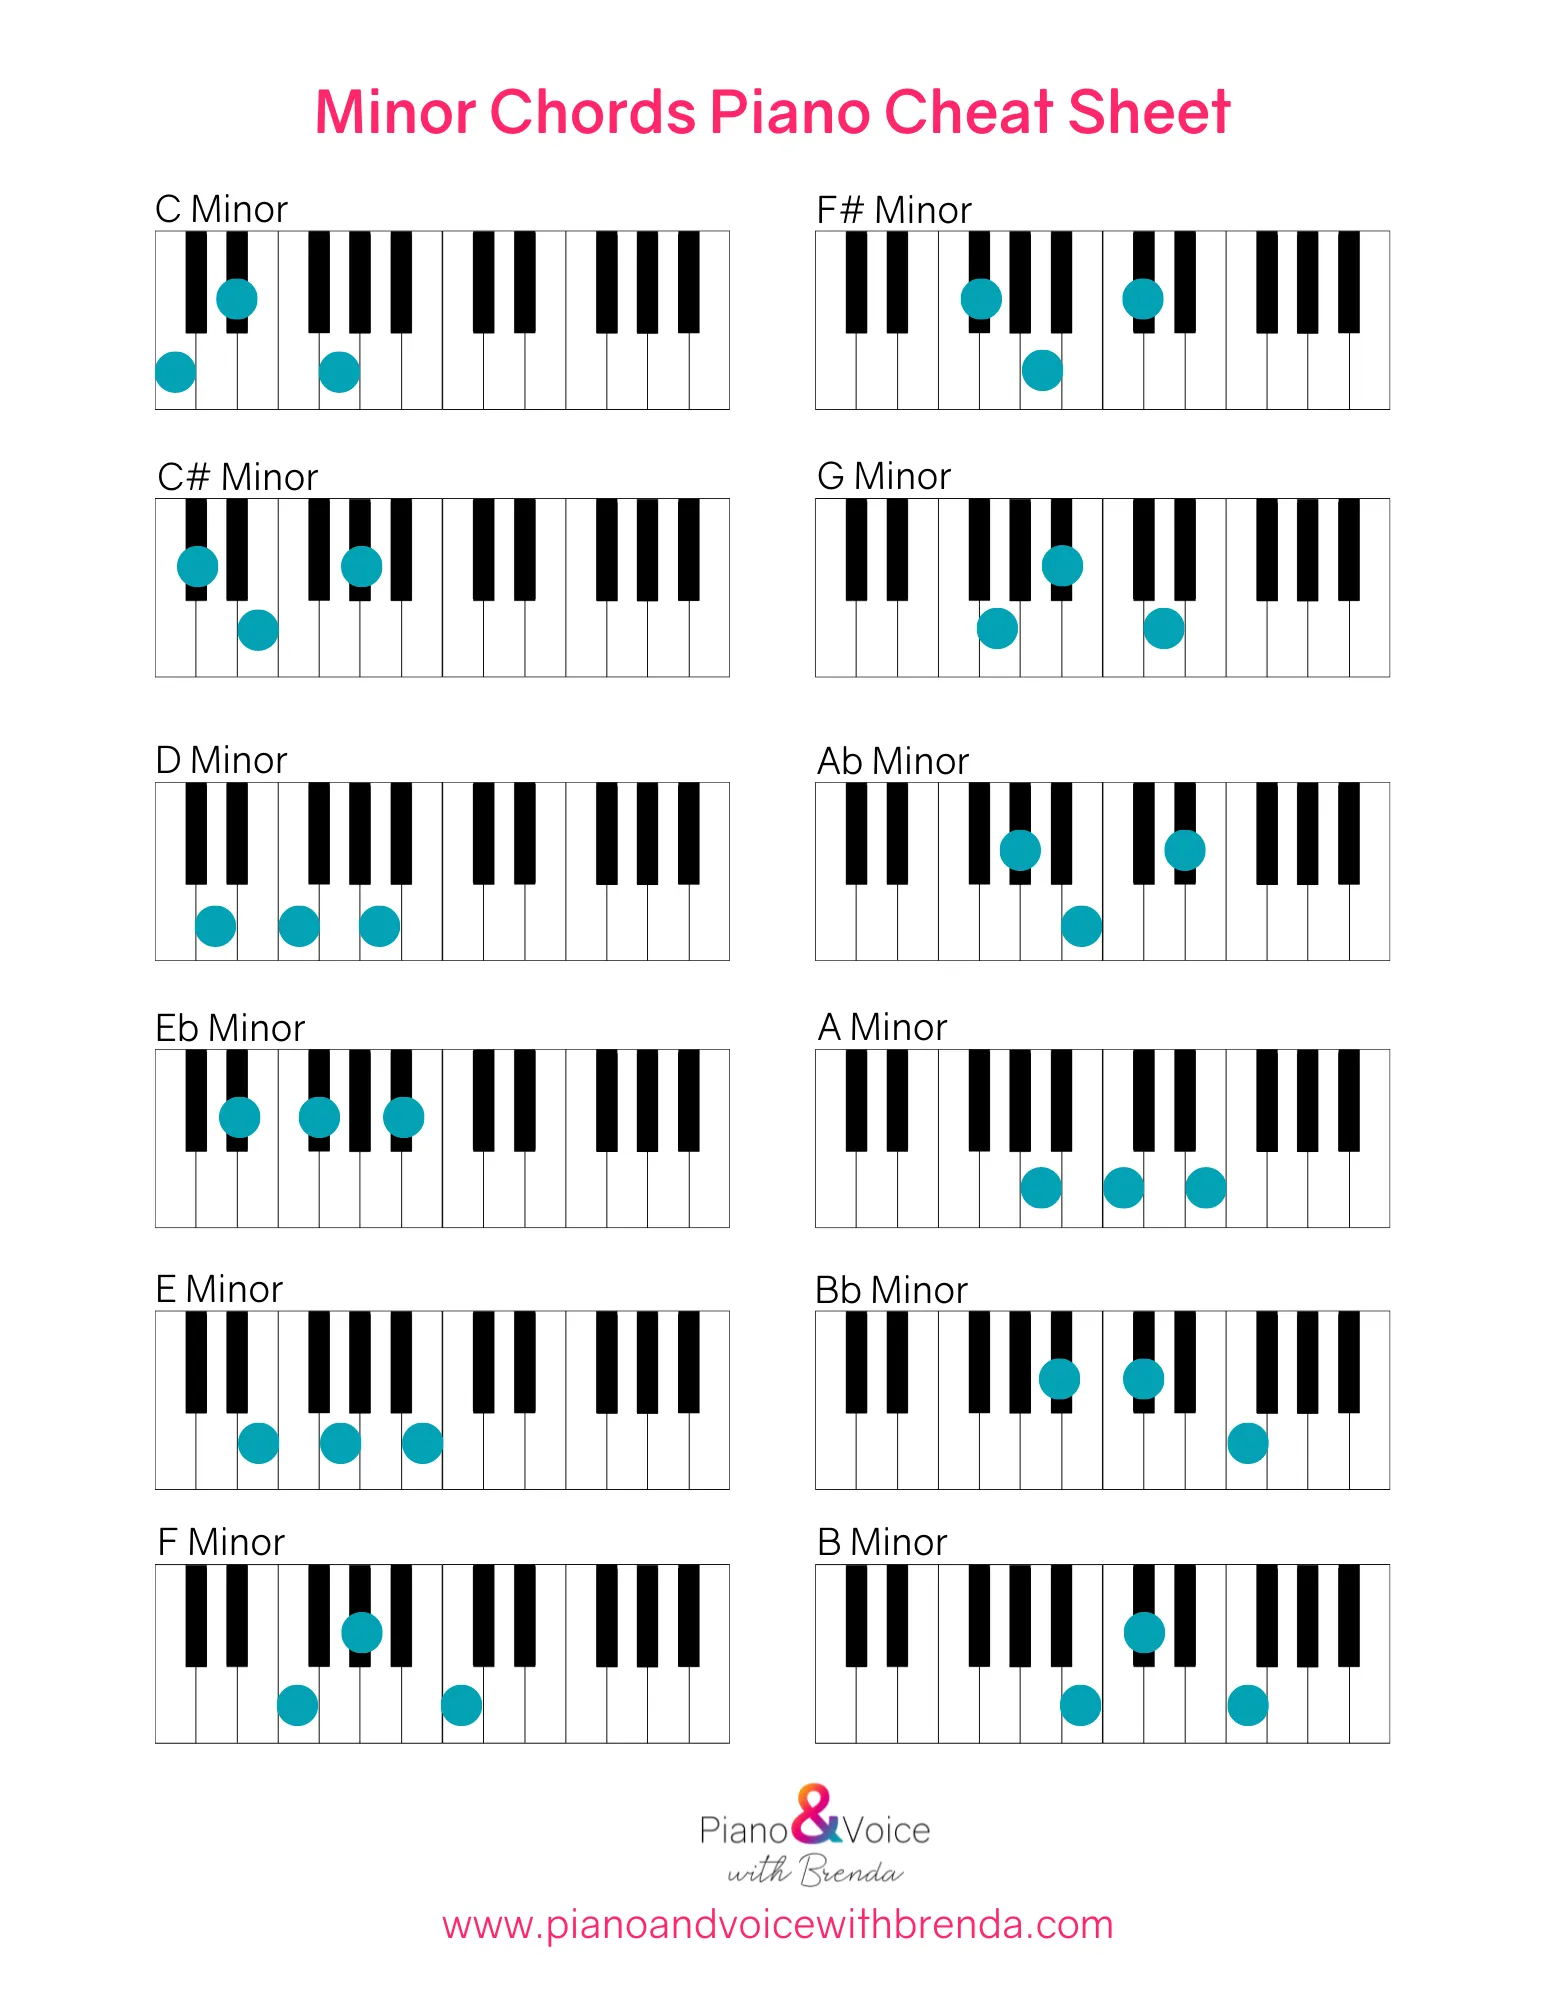 Minor chords piano keyboard cheat sheet